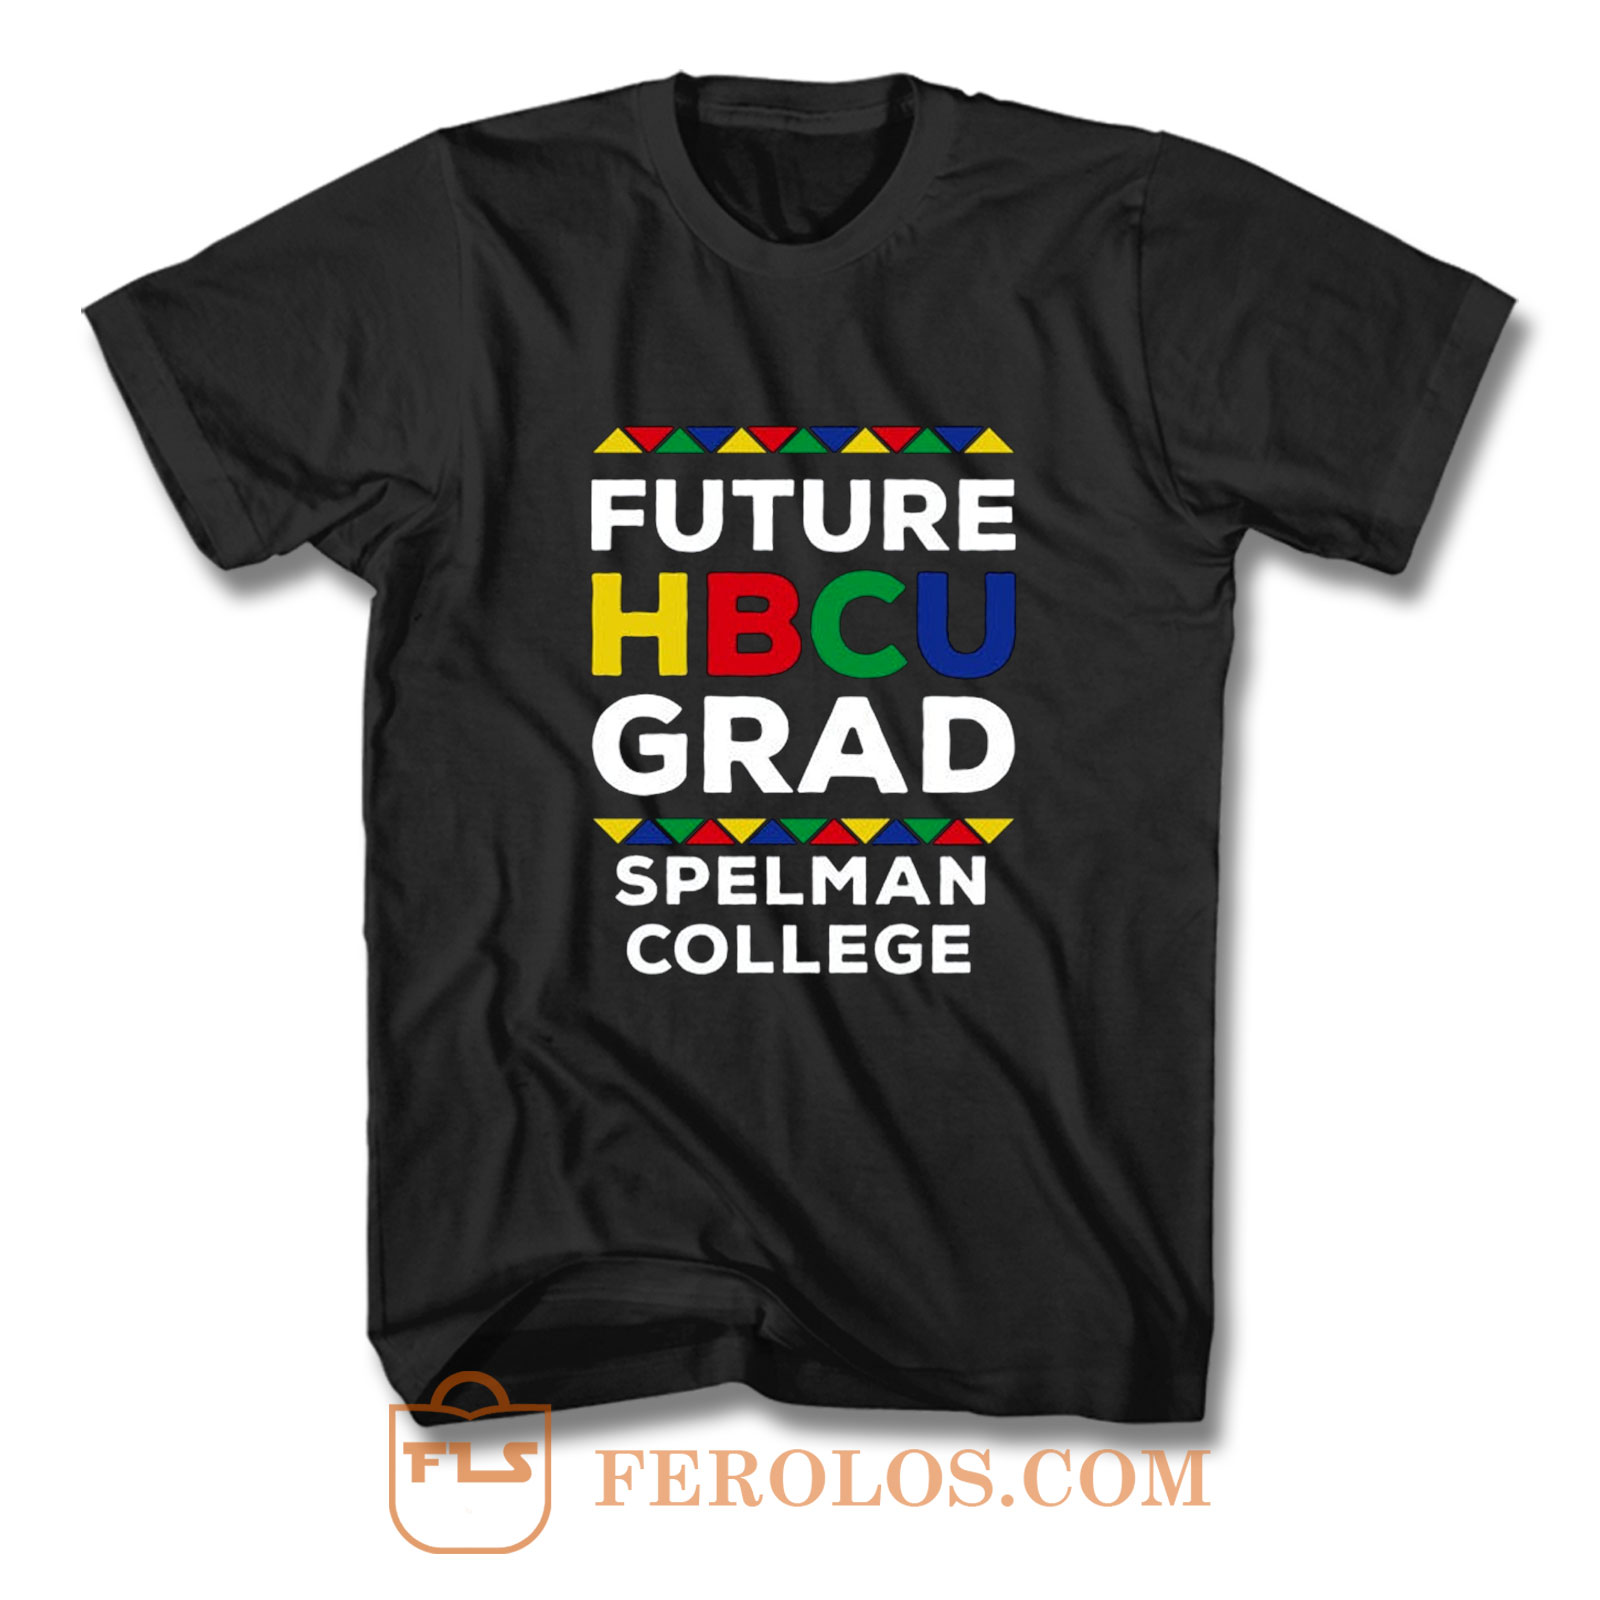 Leeds Besmettelijk Boek Future Hbcu Grad Spelman College T Shirt | FEROLOS.COM